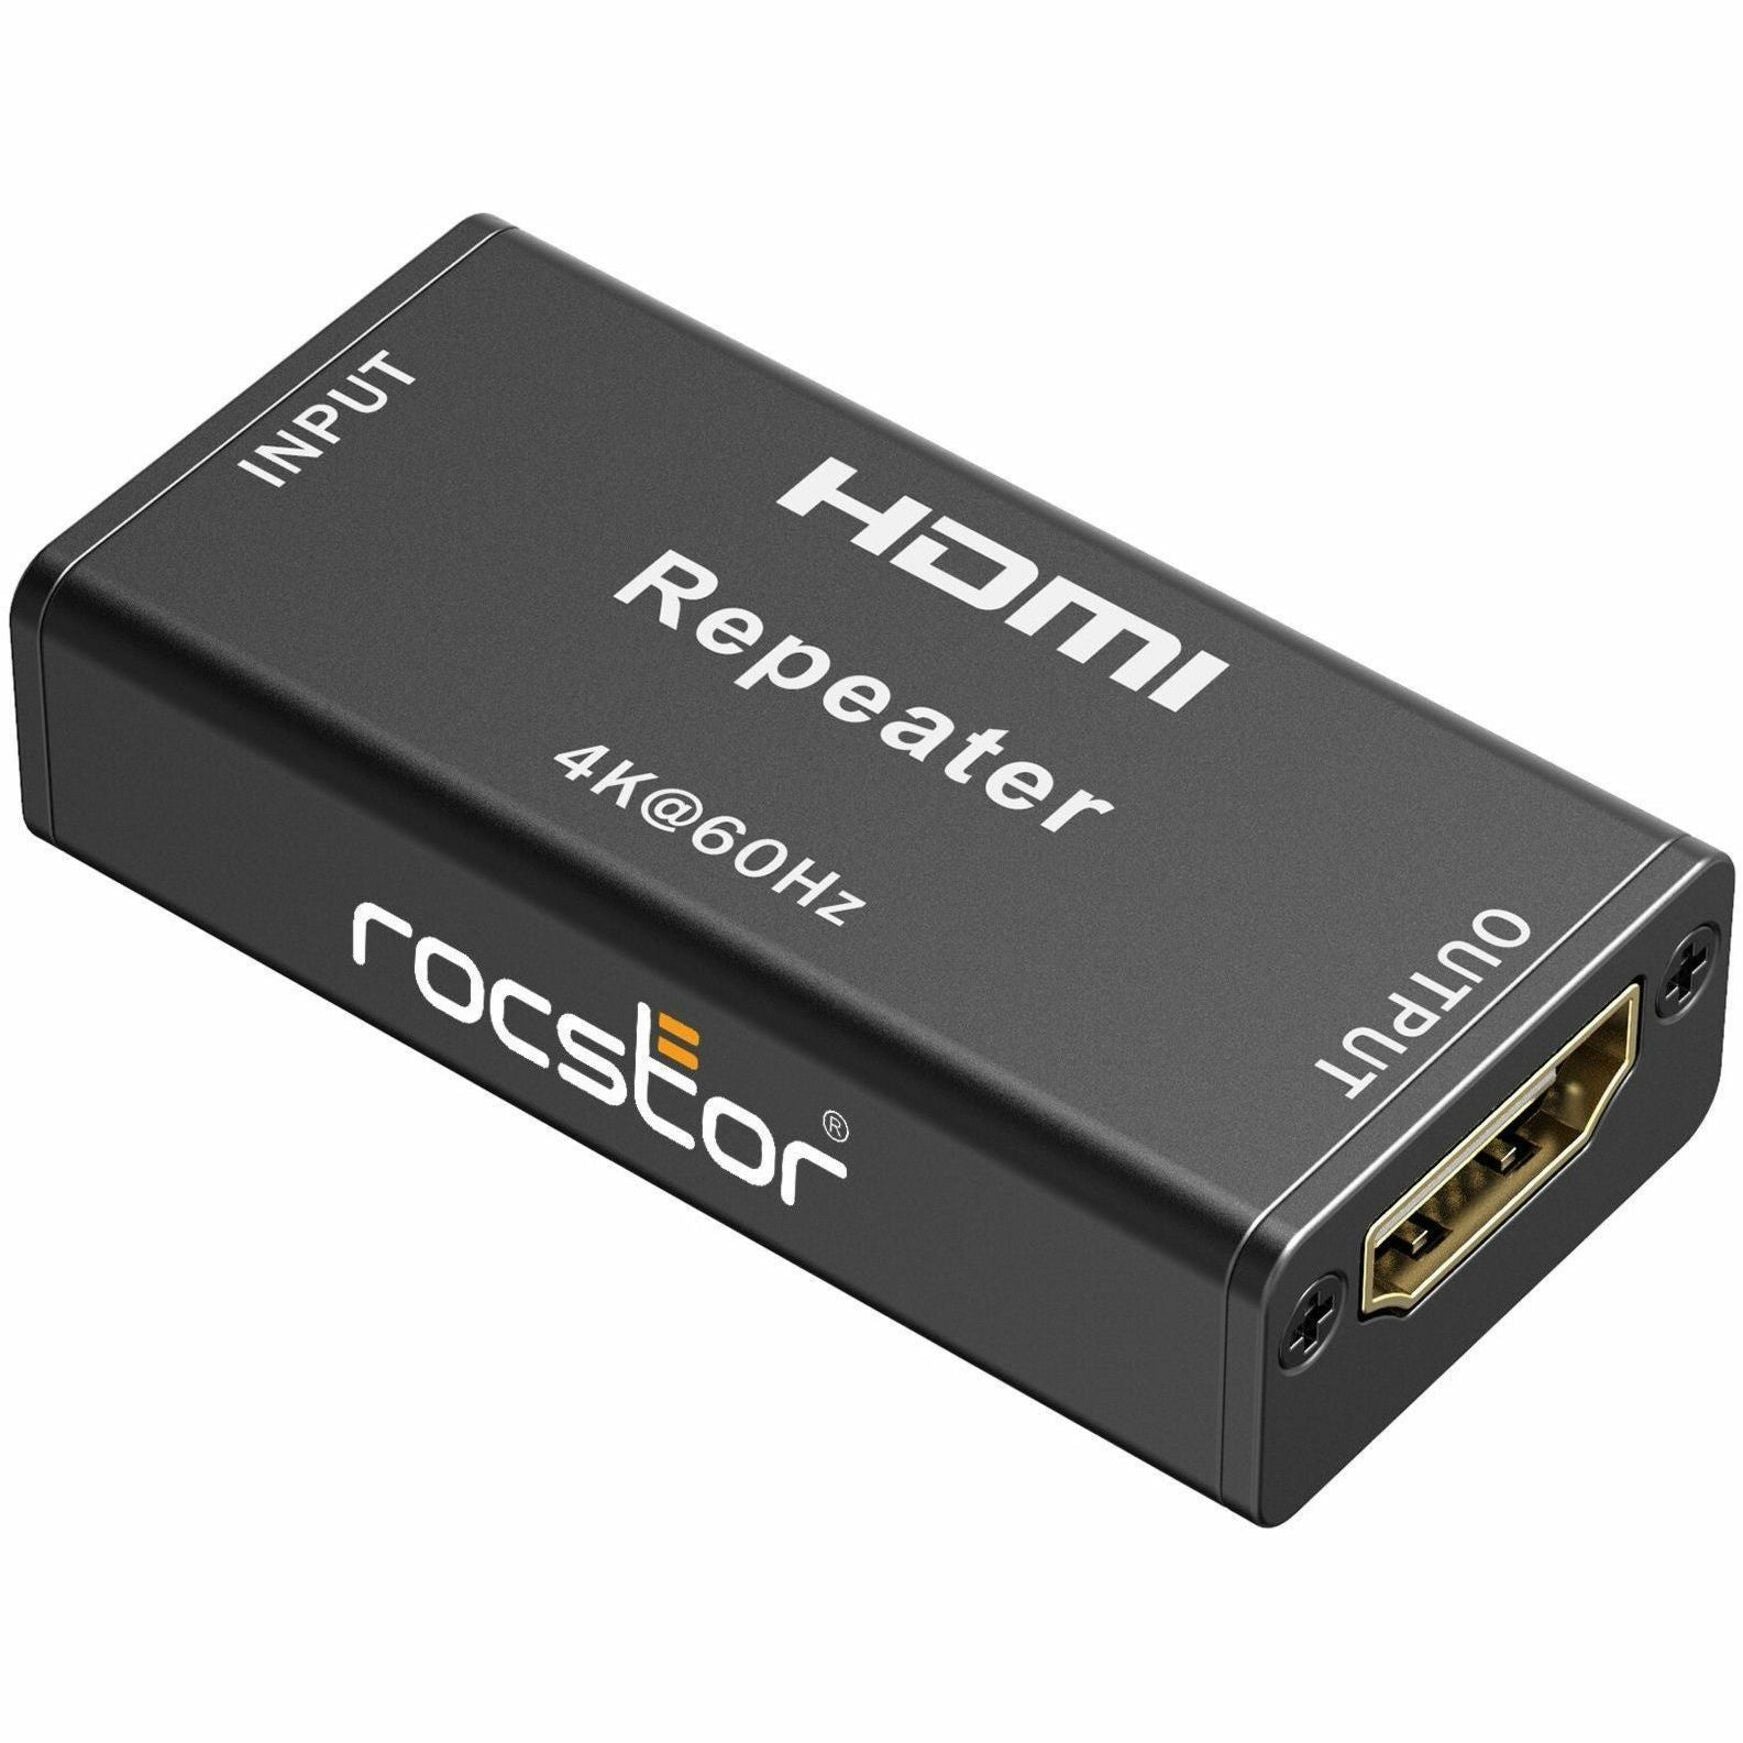 Rocstor Y10G003-B1 4Kx2K HDMI Repeater Extender - Boosts Signal & Amplifies Video, 132 ft Range